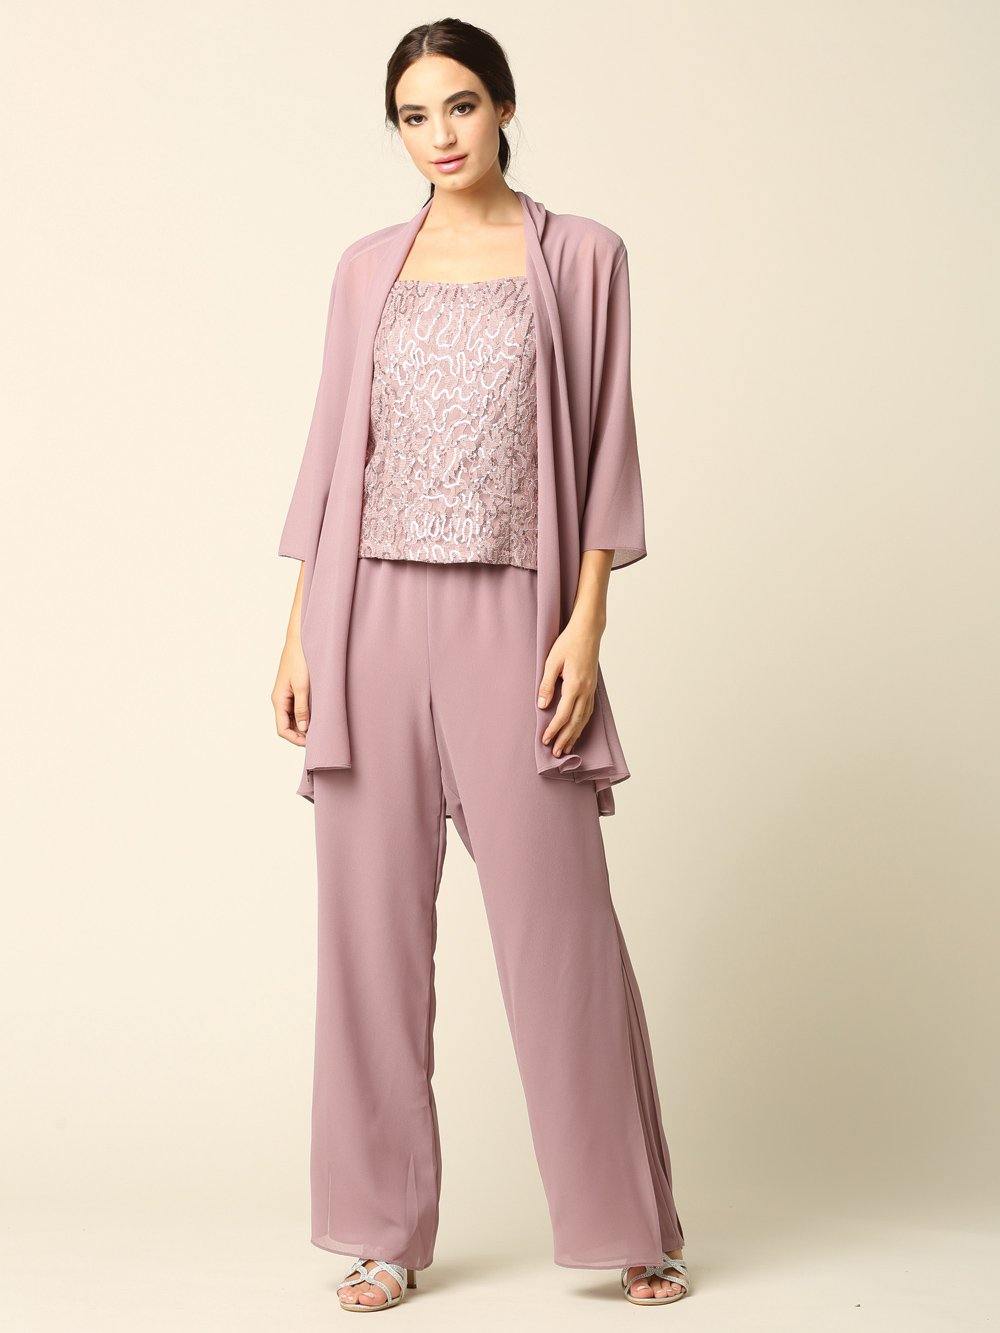 Mother of the Bride Formal Jacket Pant Suit - The Dress Outlet Eva Fashion